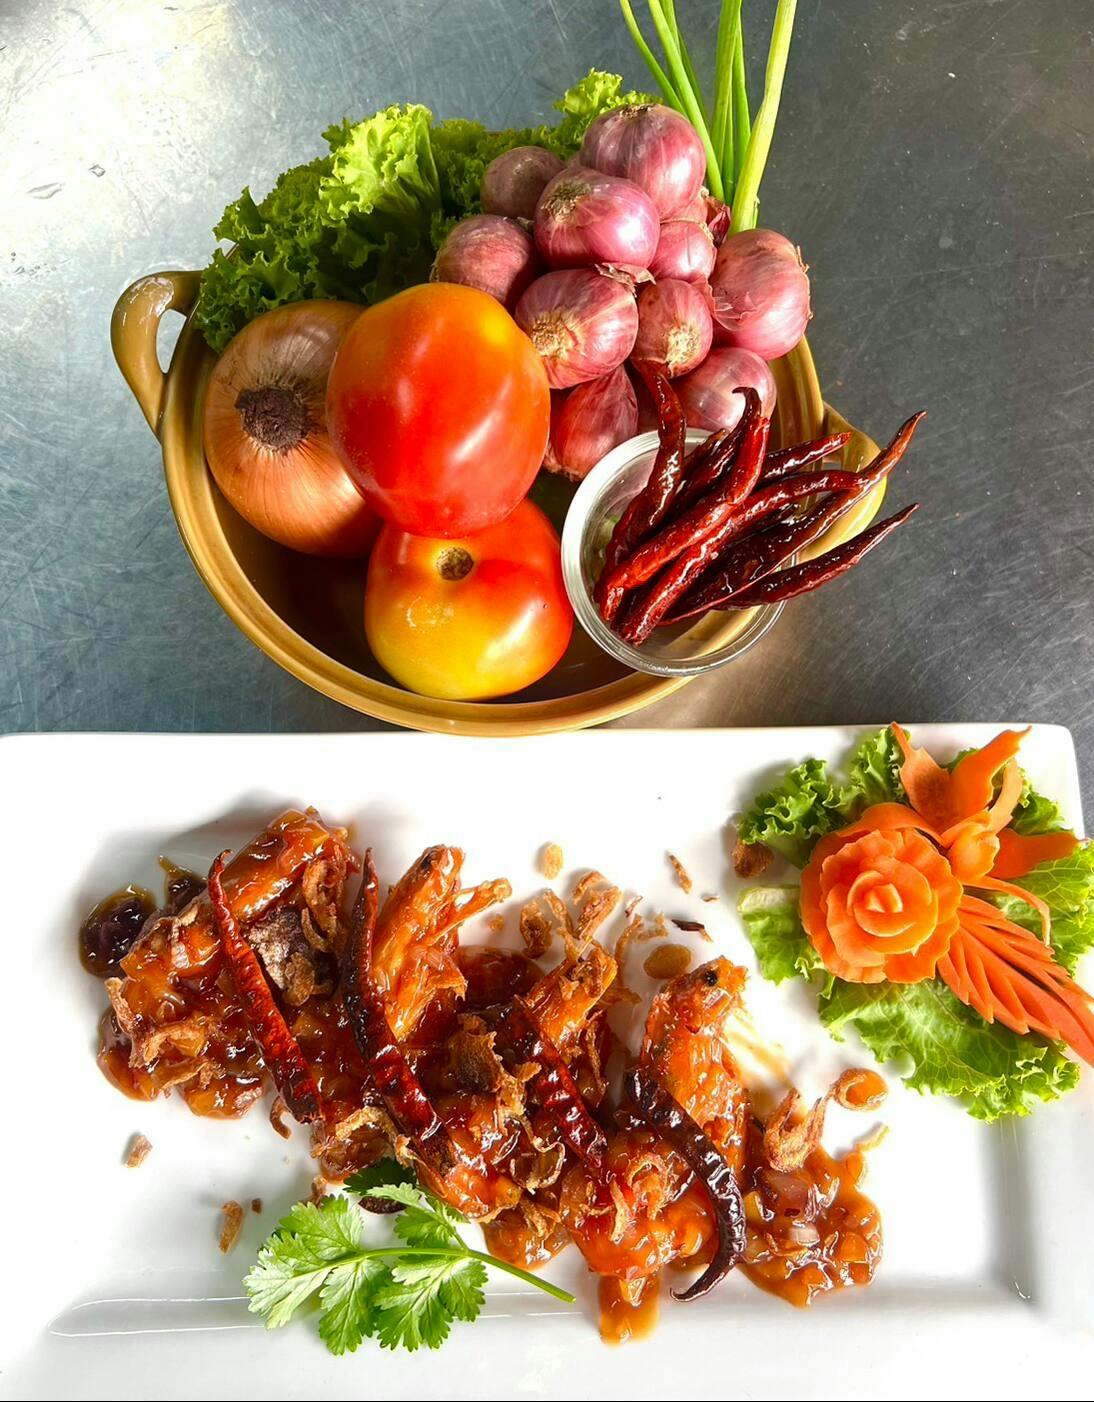 Half-day Krabi Sukhothai Cooking Lesson